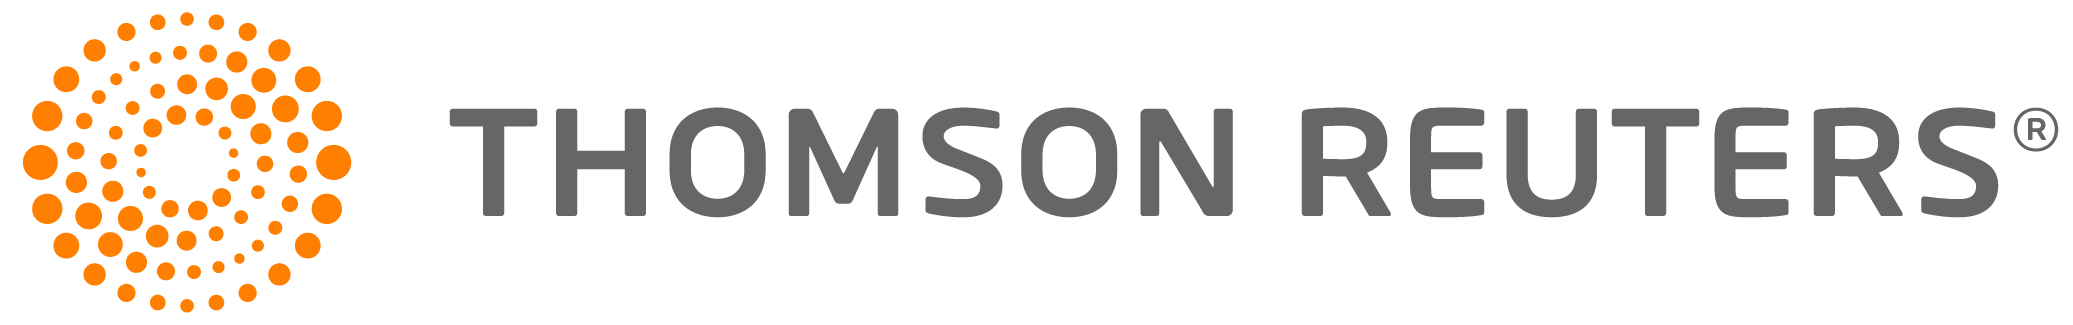 Thompson Reuters Logo & Wordmark